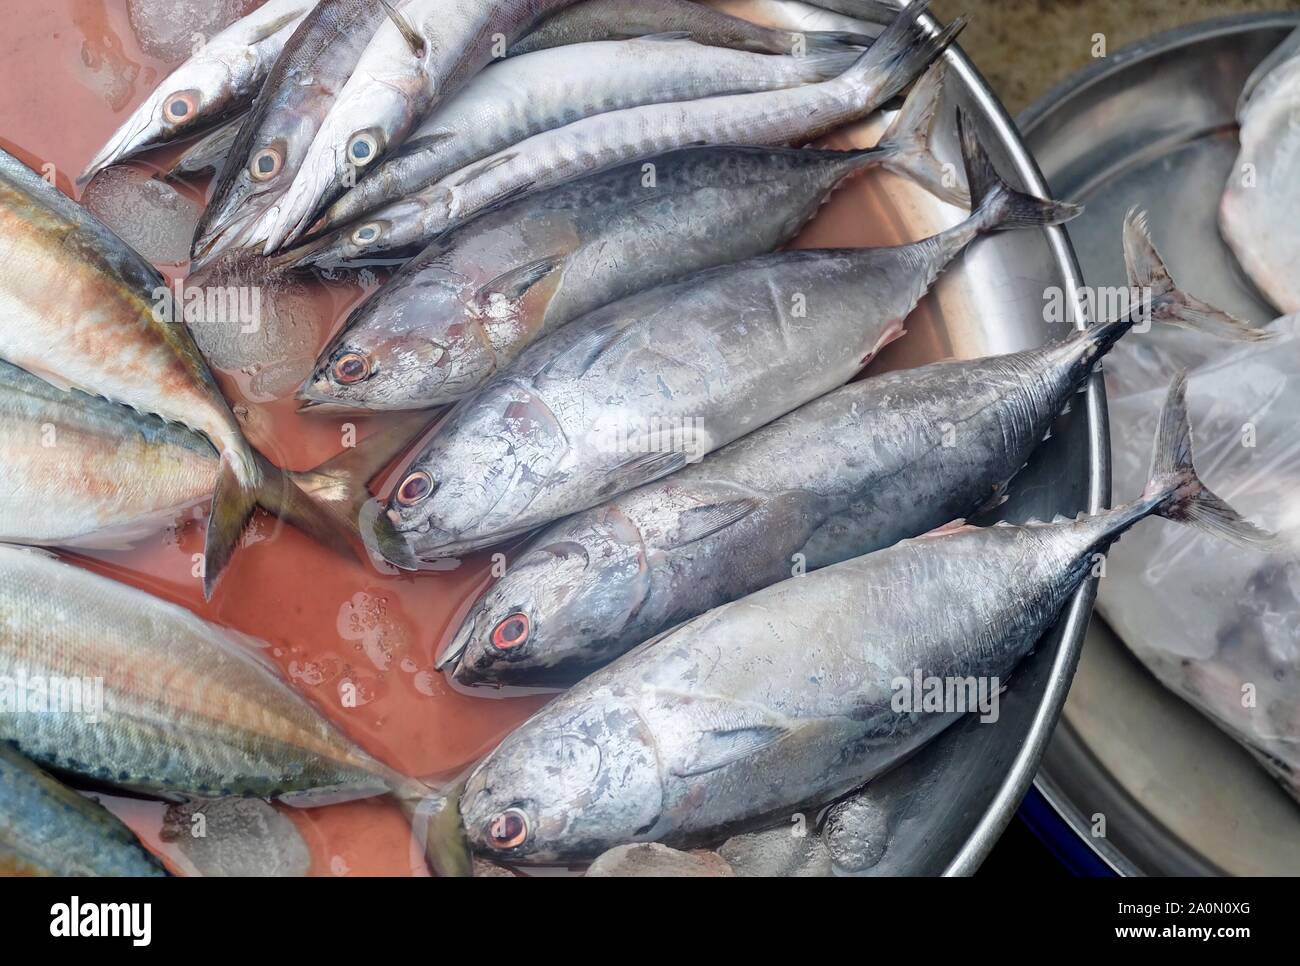 Fresh Spotted Tuna, Tonngol Tuna or Thunnus Tonggol Fish at The Seafoods Market. Stock Photo